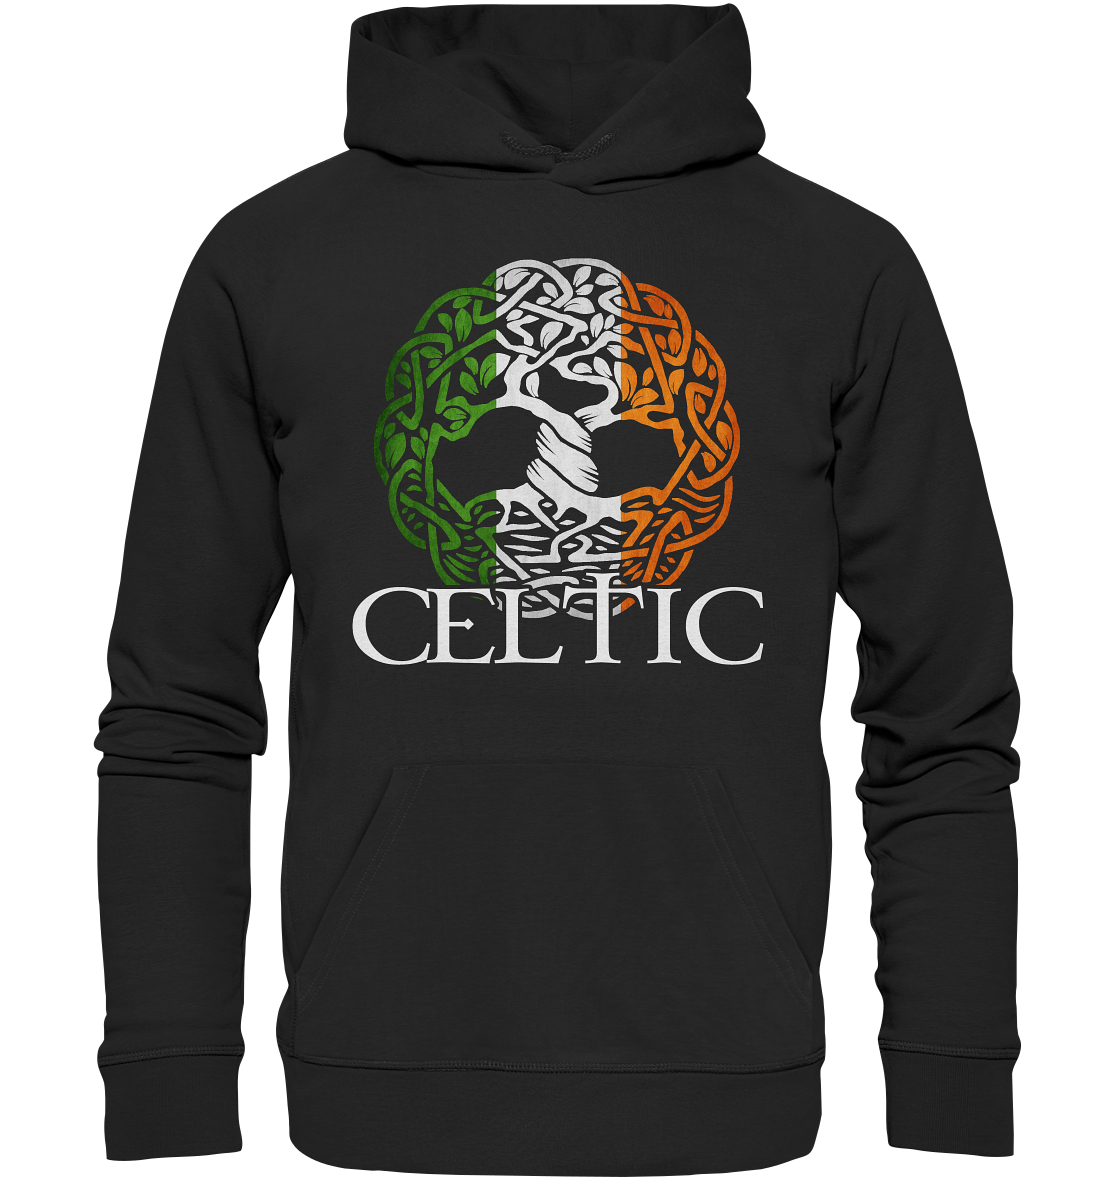 "Celtic Tree" - Premium Unisex Hoodie